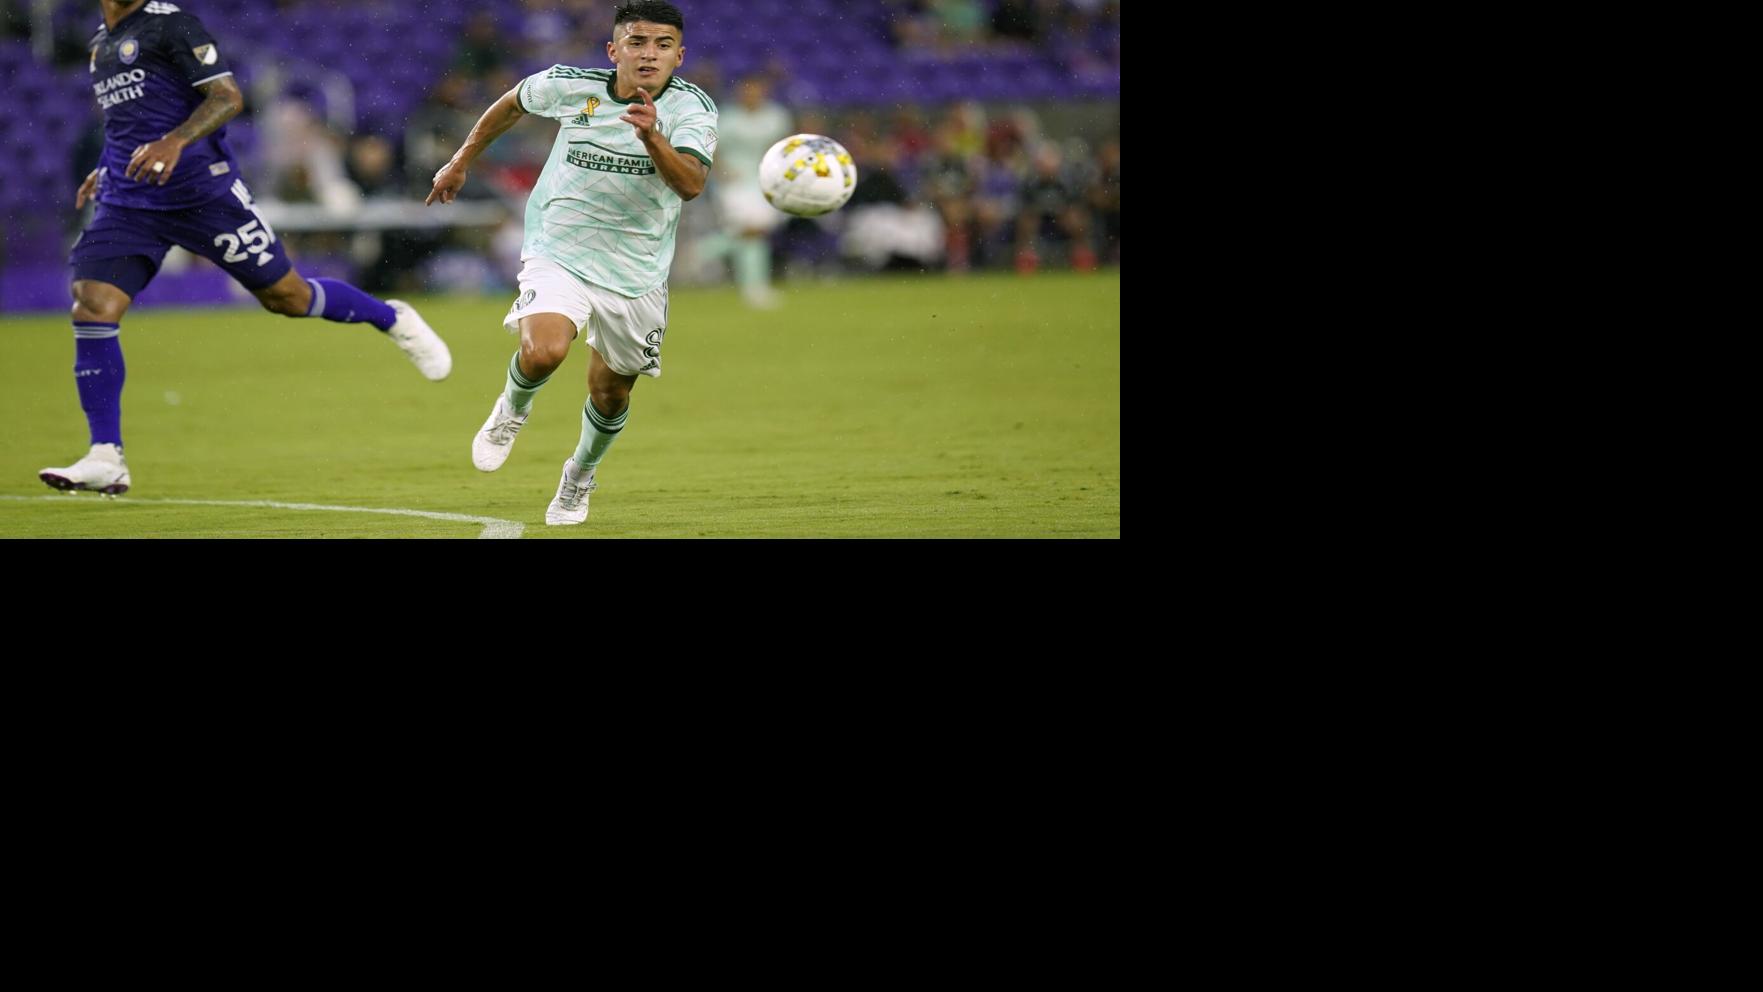 Almada, Chicharito among MLS players to watch this season